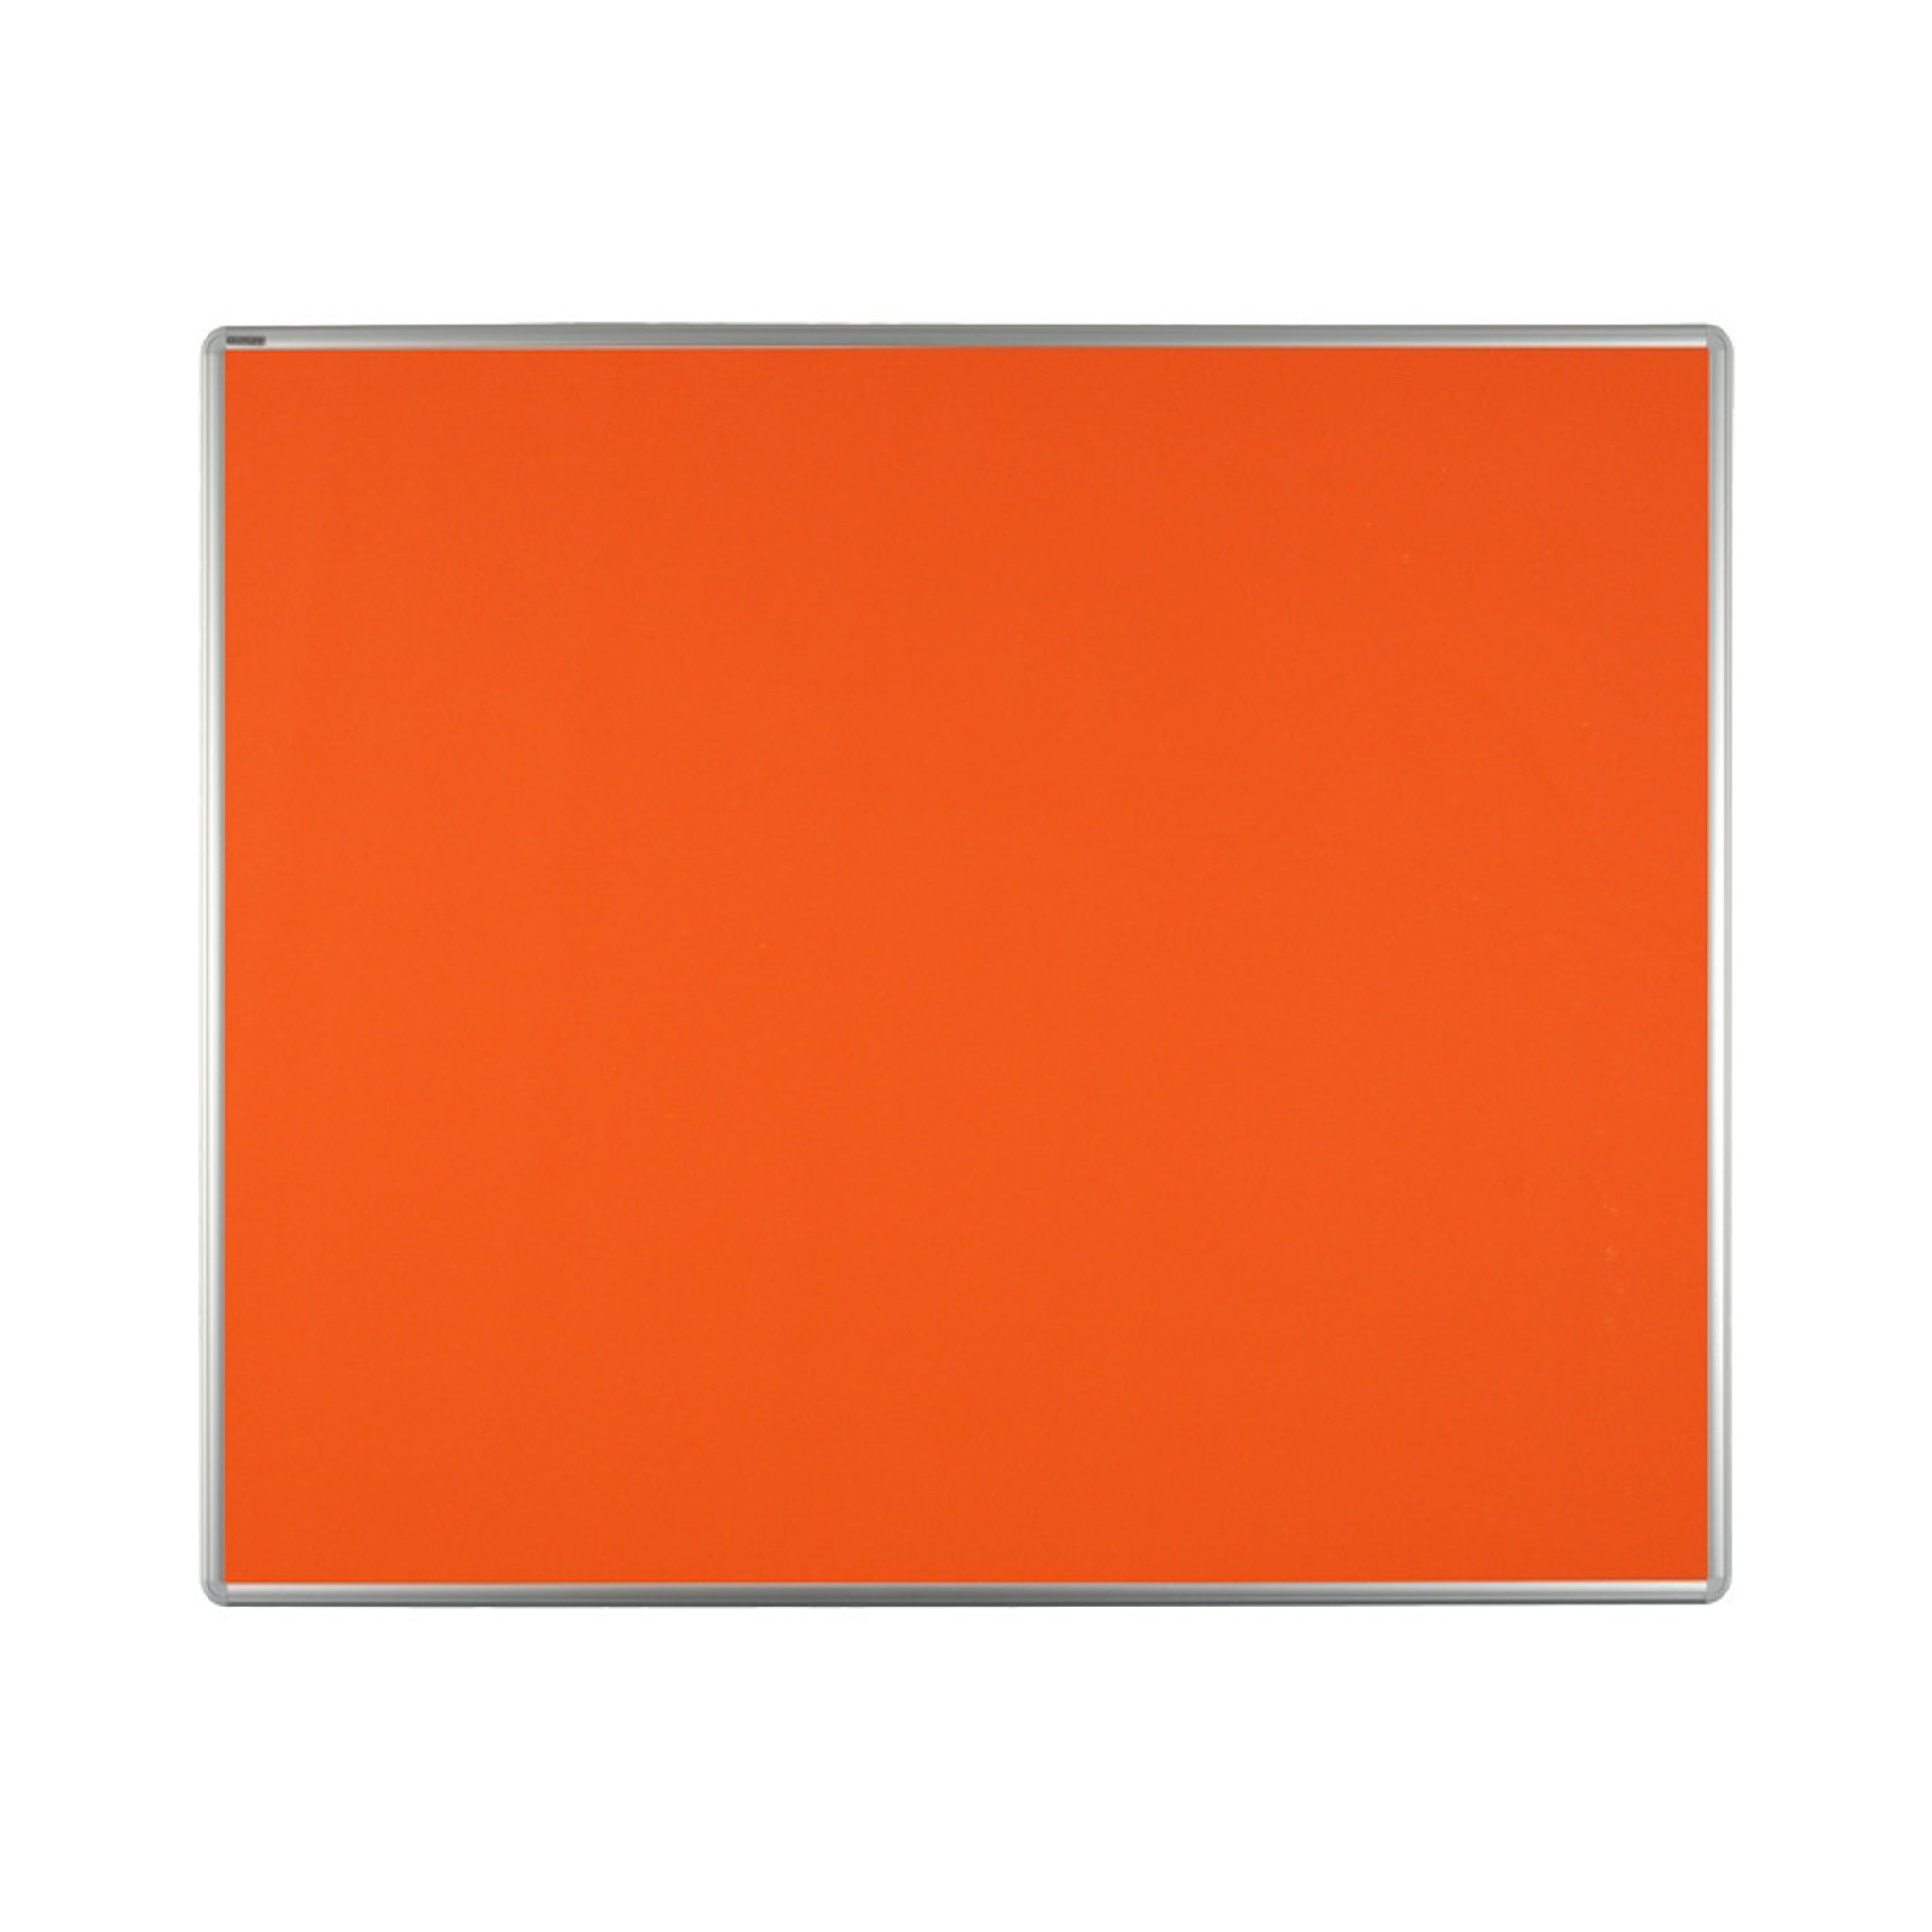 Textil-Pinnwand ekoTAB mit Alurahmen, 1200 x 900 mm, orange